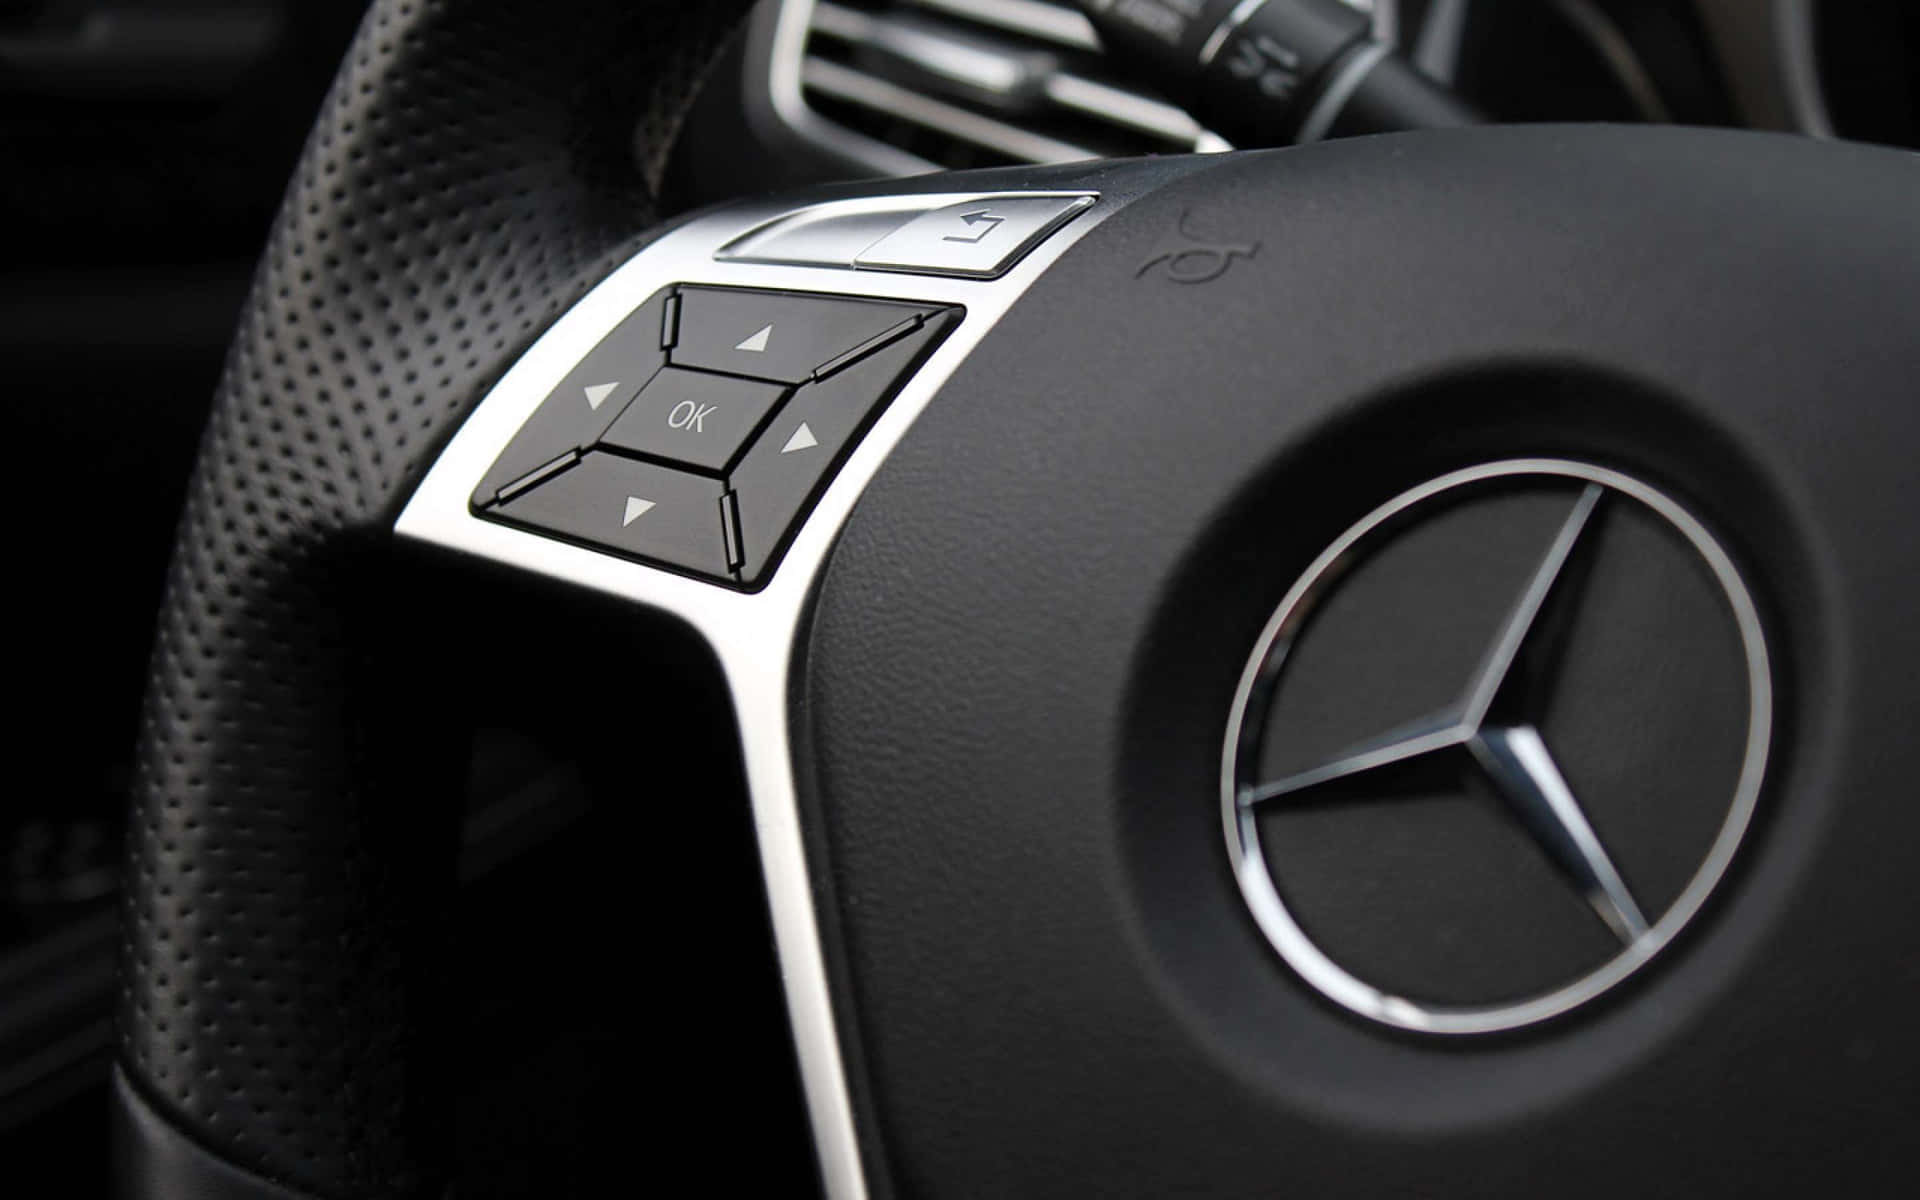 100+] Mercedes Benz Logo Pictures